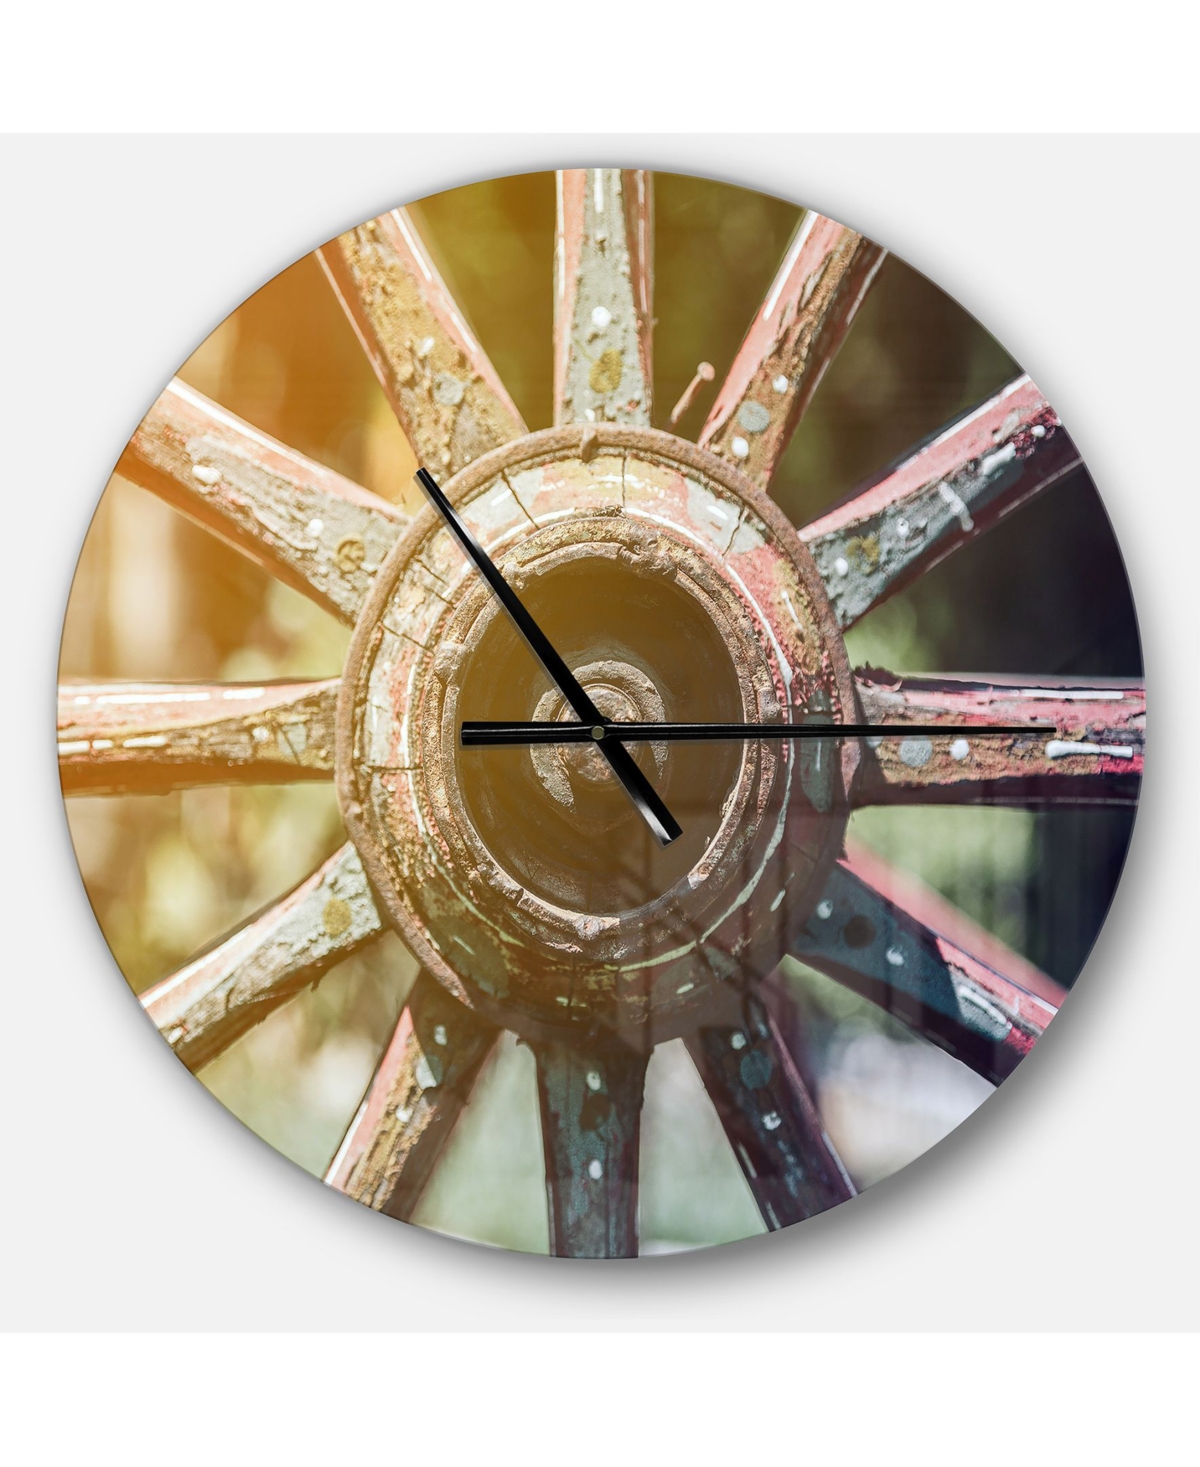 Designart Oversized Farmhouse Round Metal Wall Clock